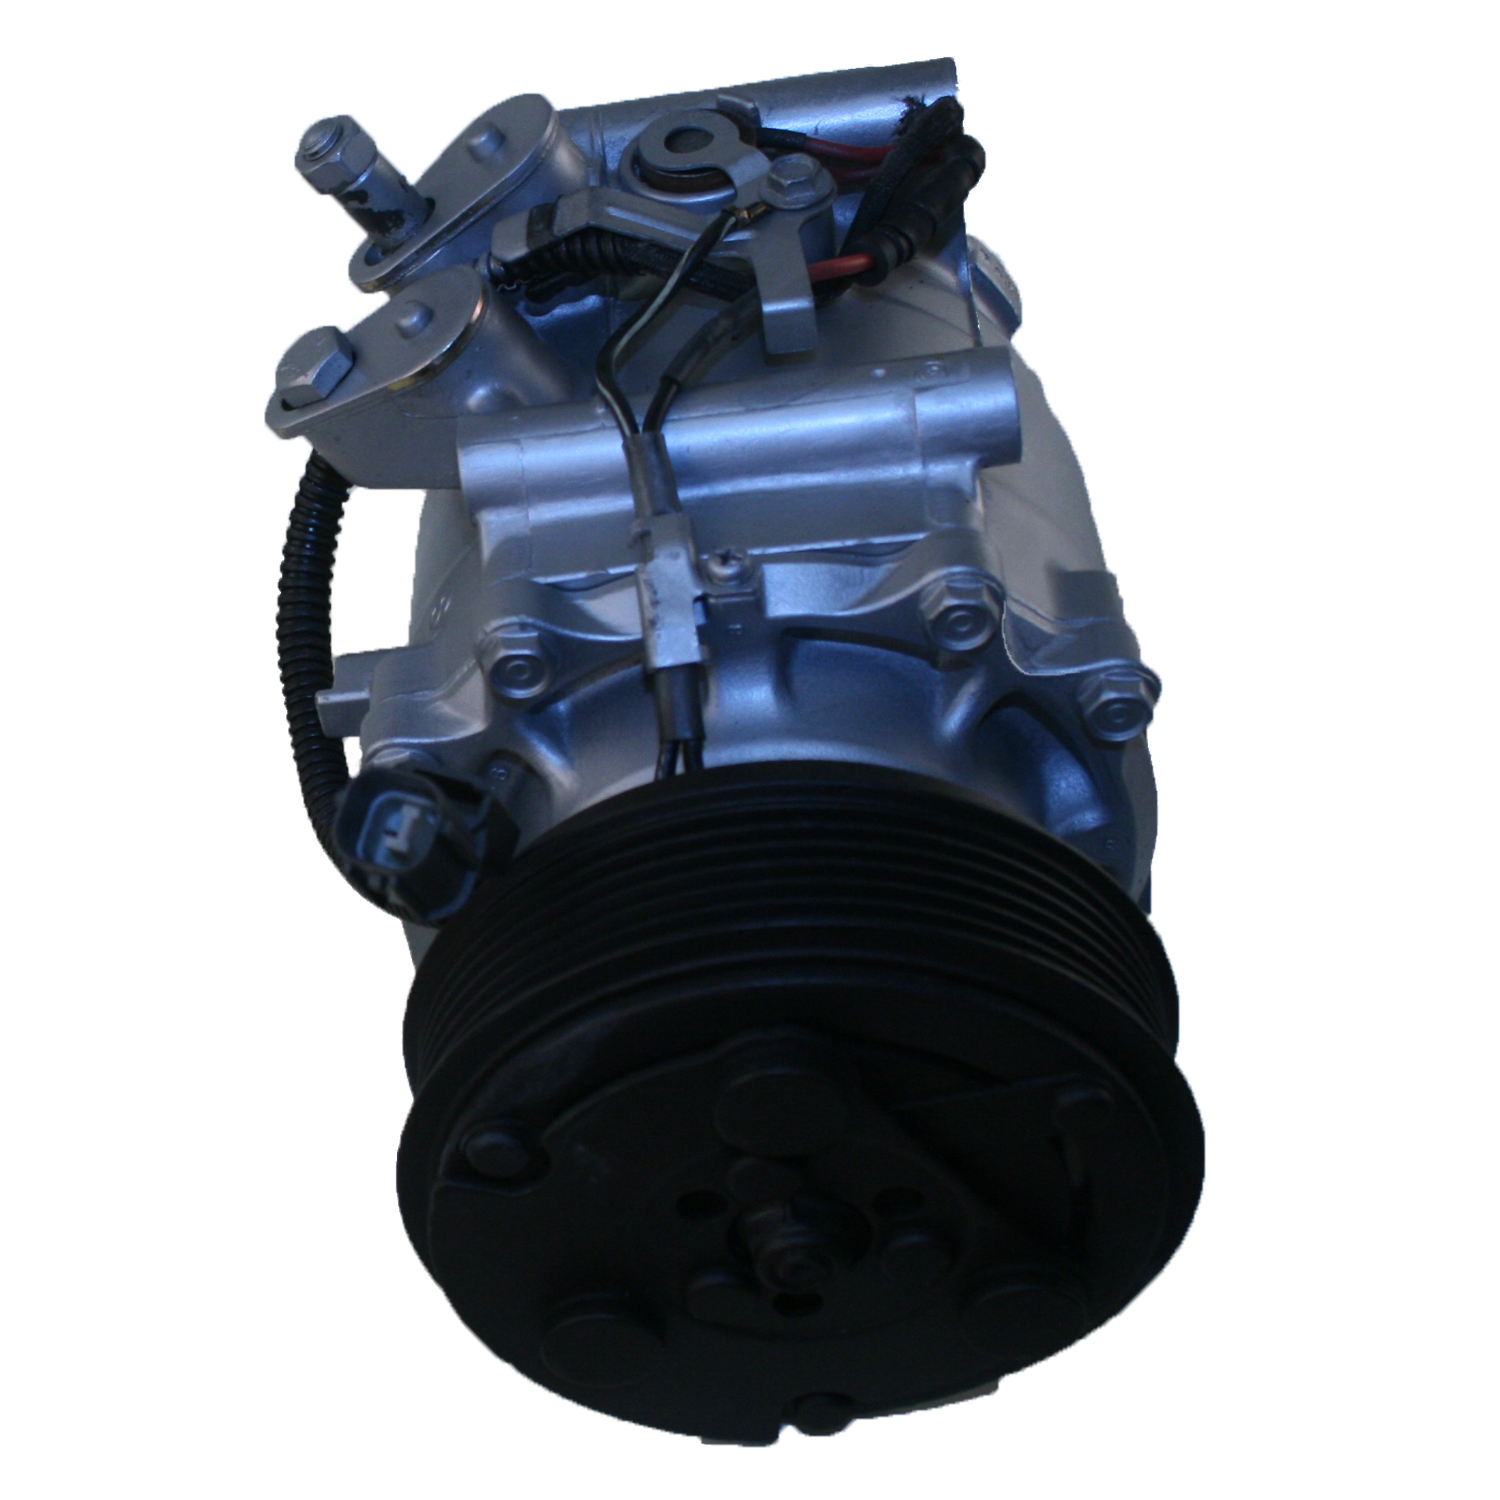 TCW Compressor 40863.601 Remanufactured Product Image field_60b6a13a6e67c